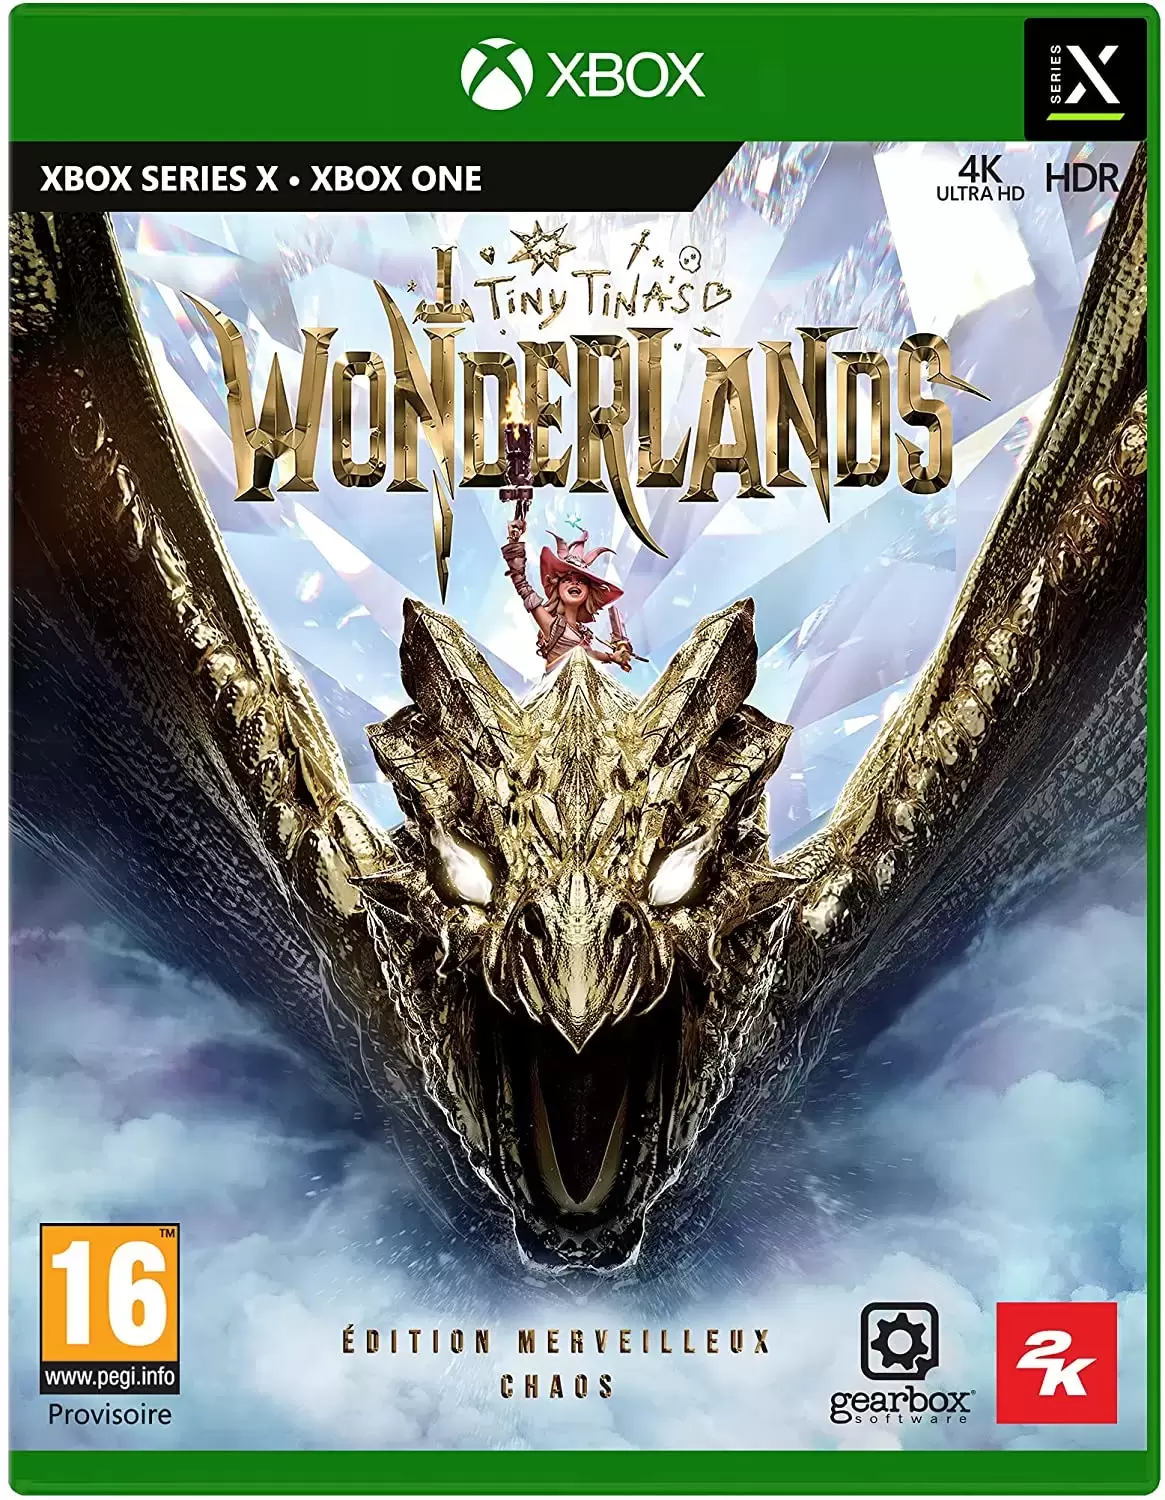 XBOX Series X Games - Tiny Tina\'s Wonderlands Edition Merveilleux Chaos